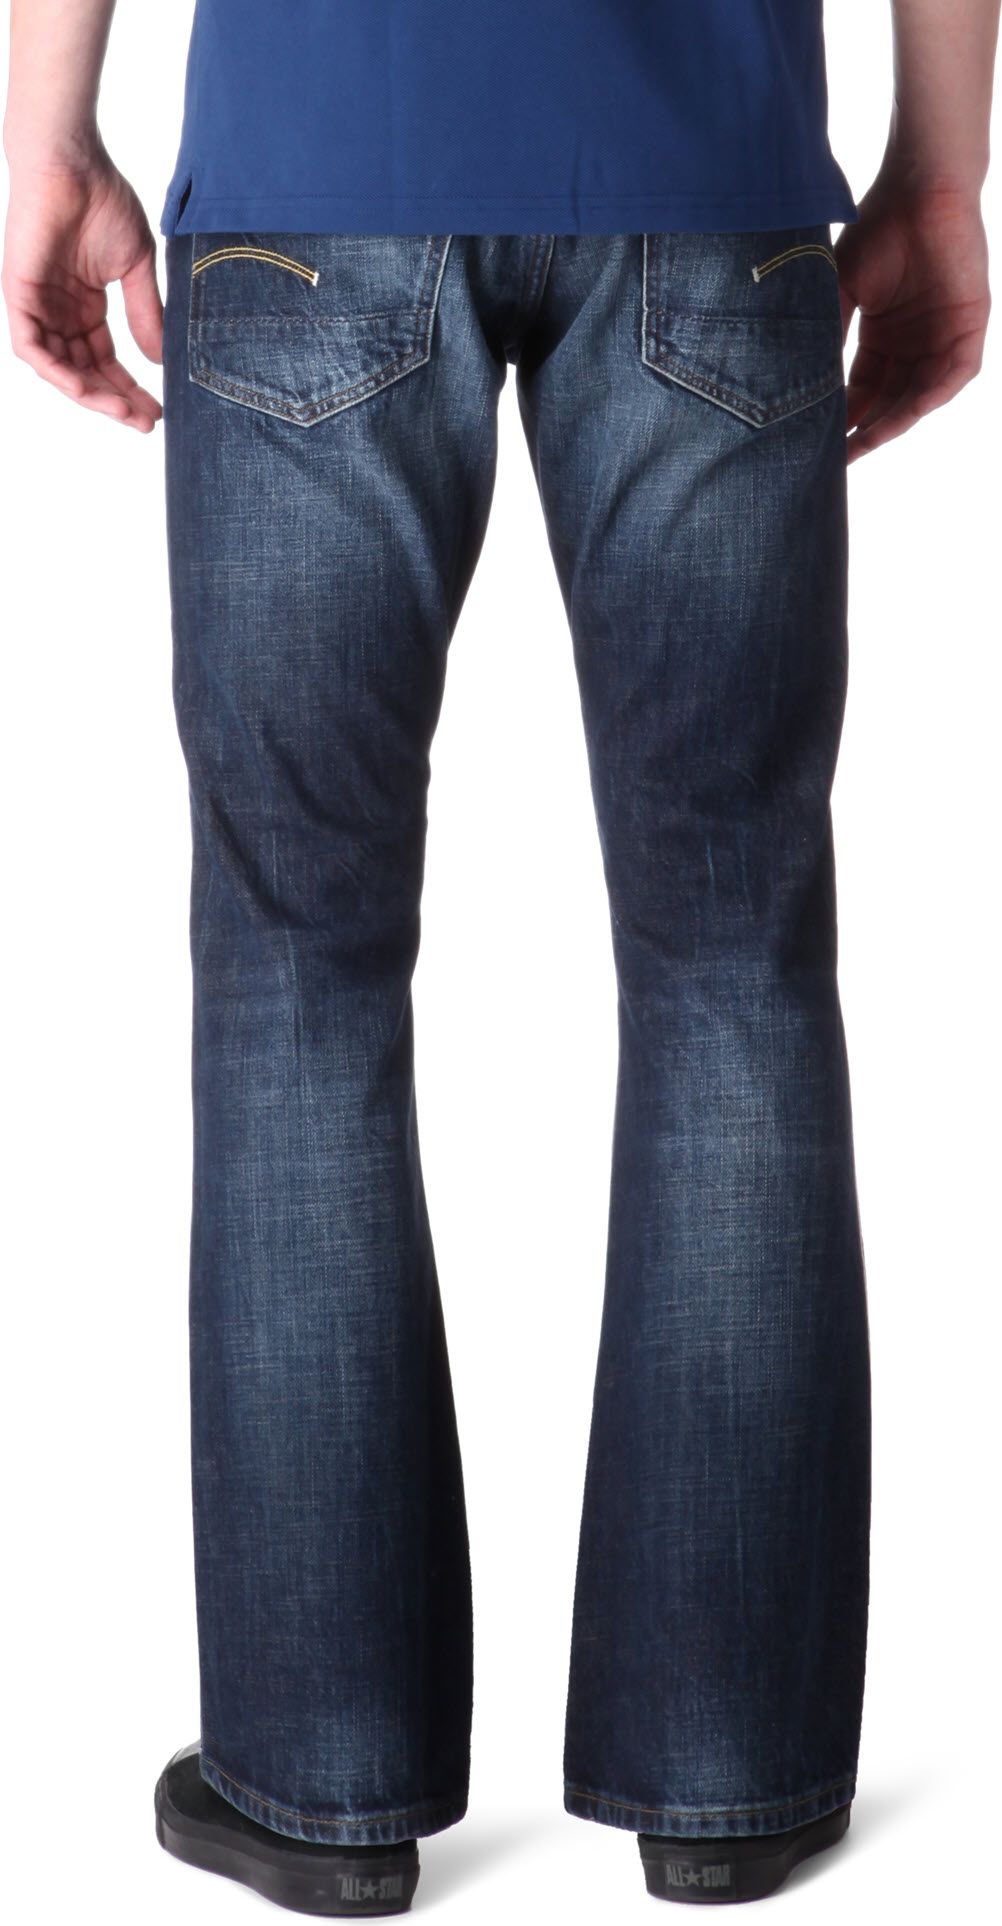 Ongelofelijk Egoïsme micro g star 3301 bootcut mens jeans, Off 68%, www.iusarecords.com